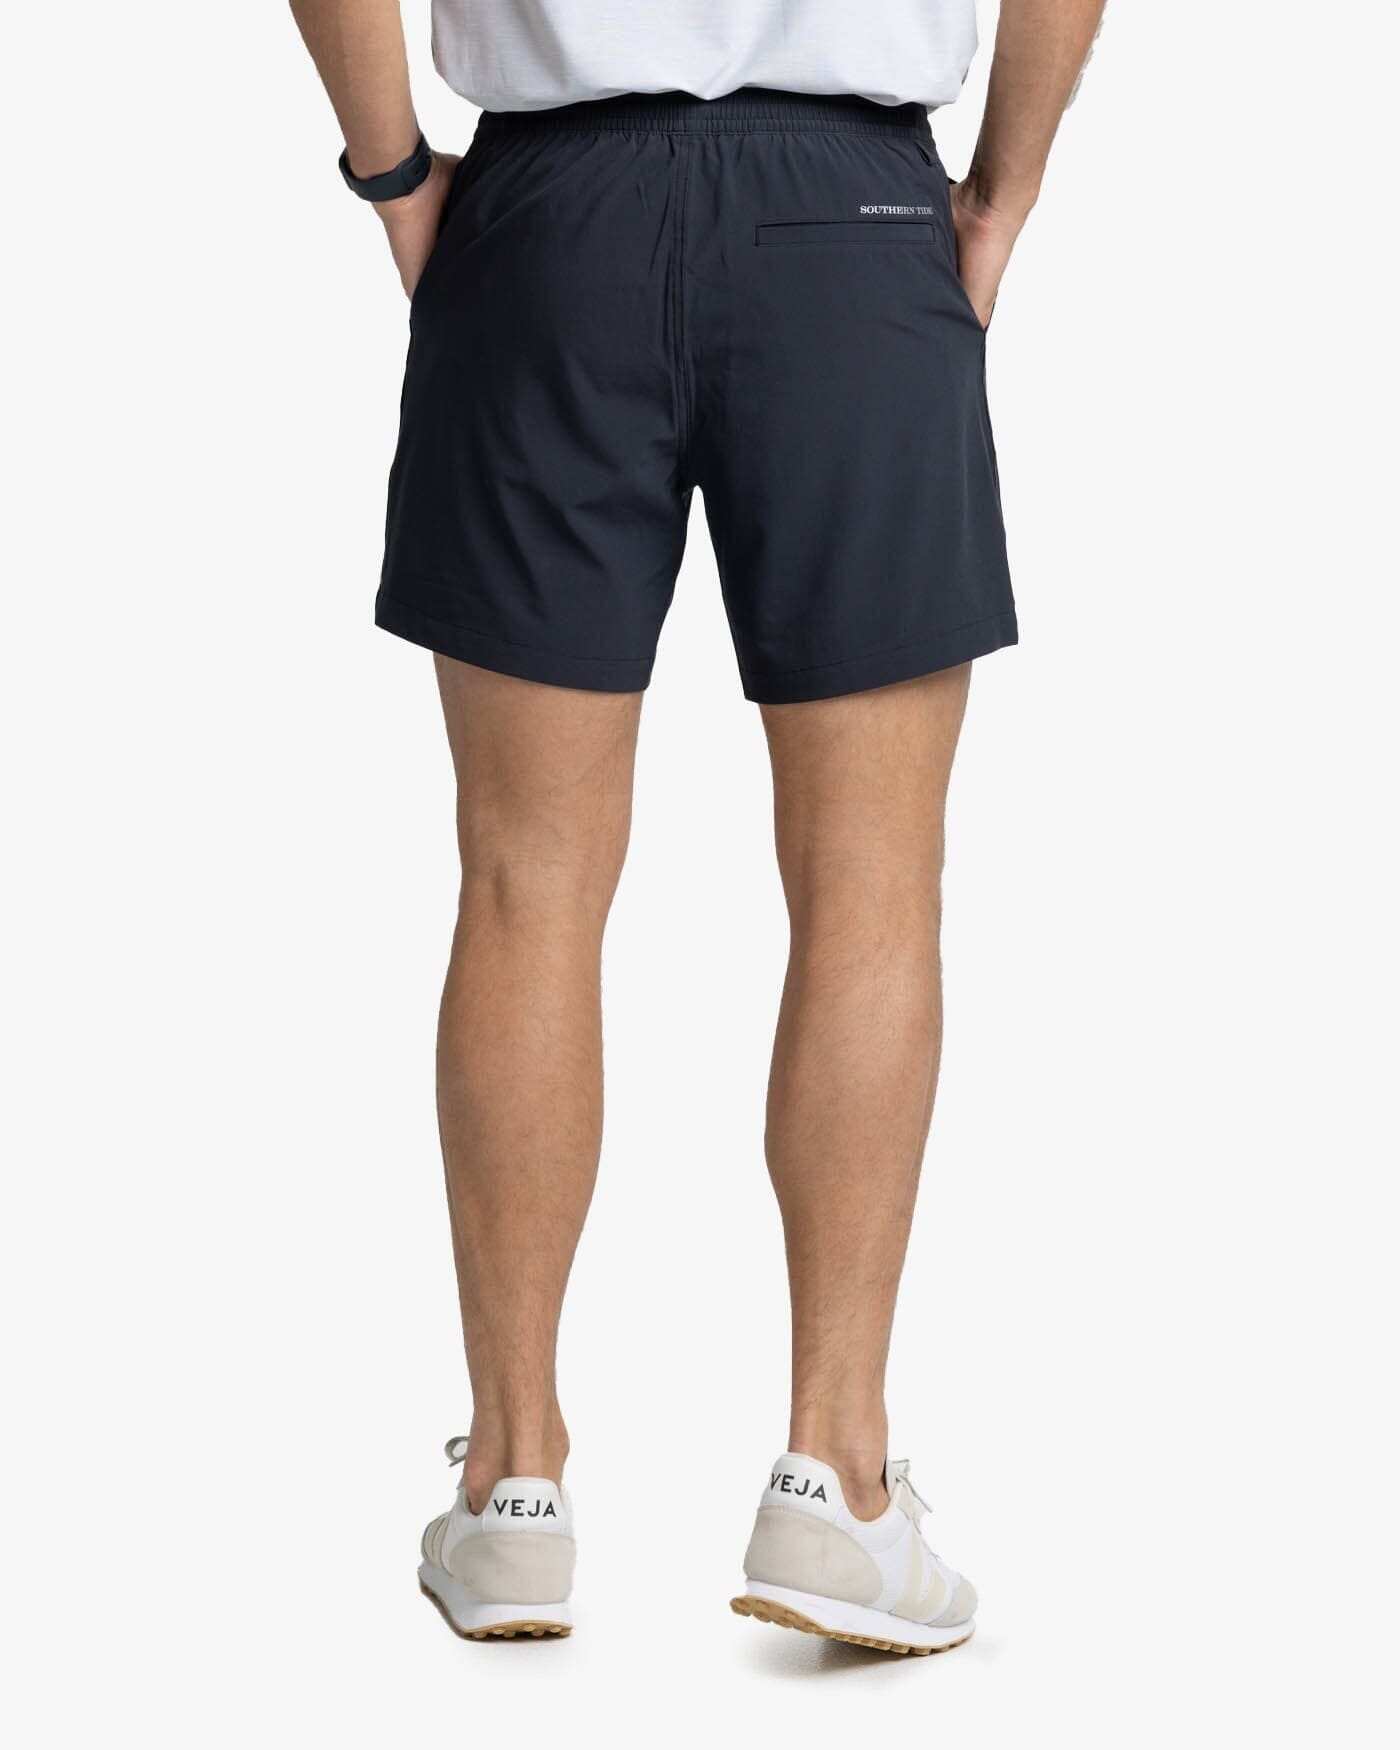 Men's 7 Inch Khaki Shorts - Channel Marker Fabric